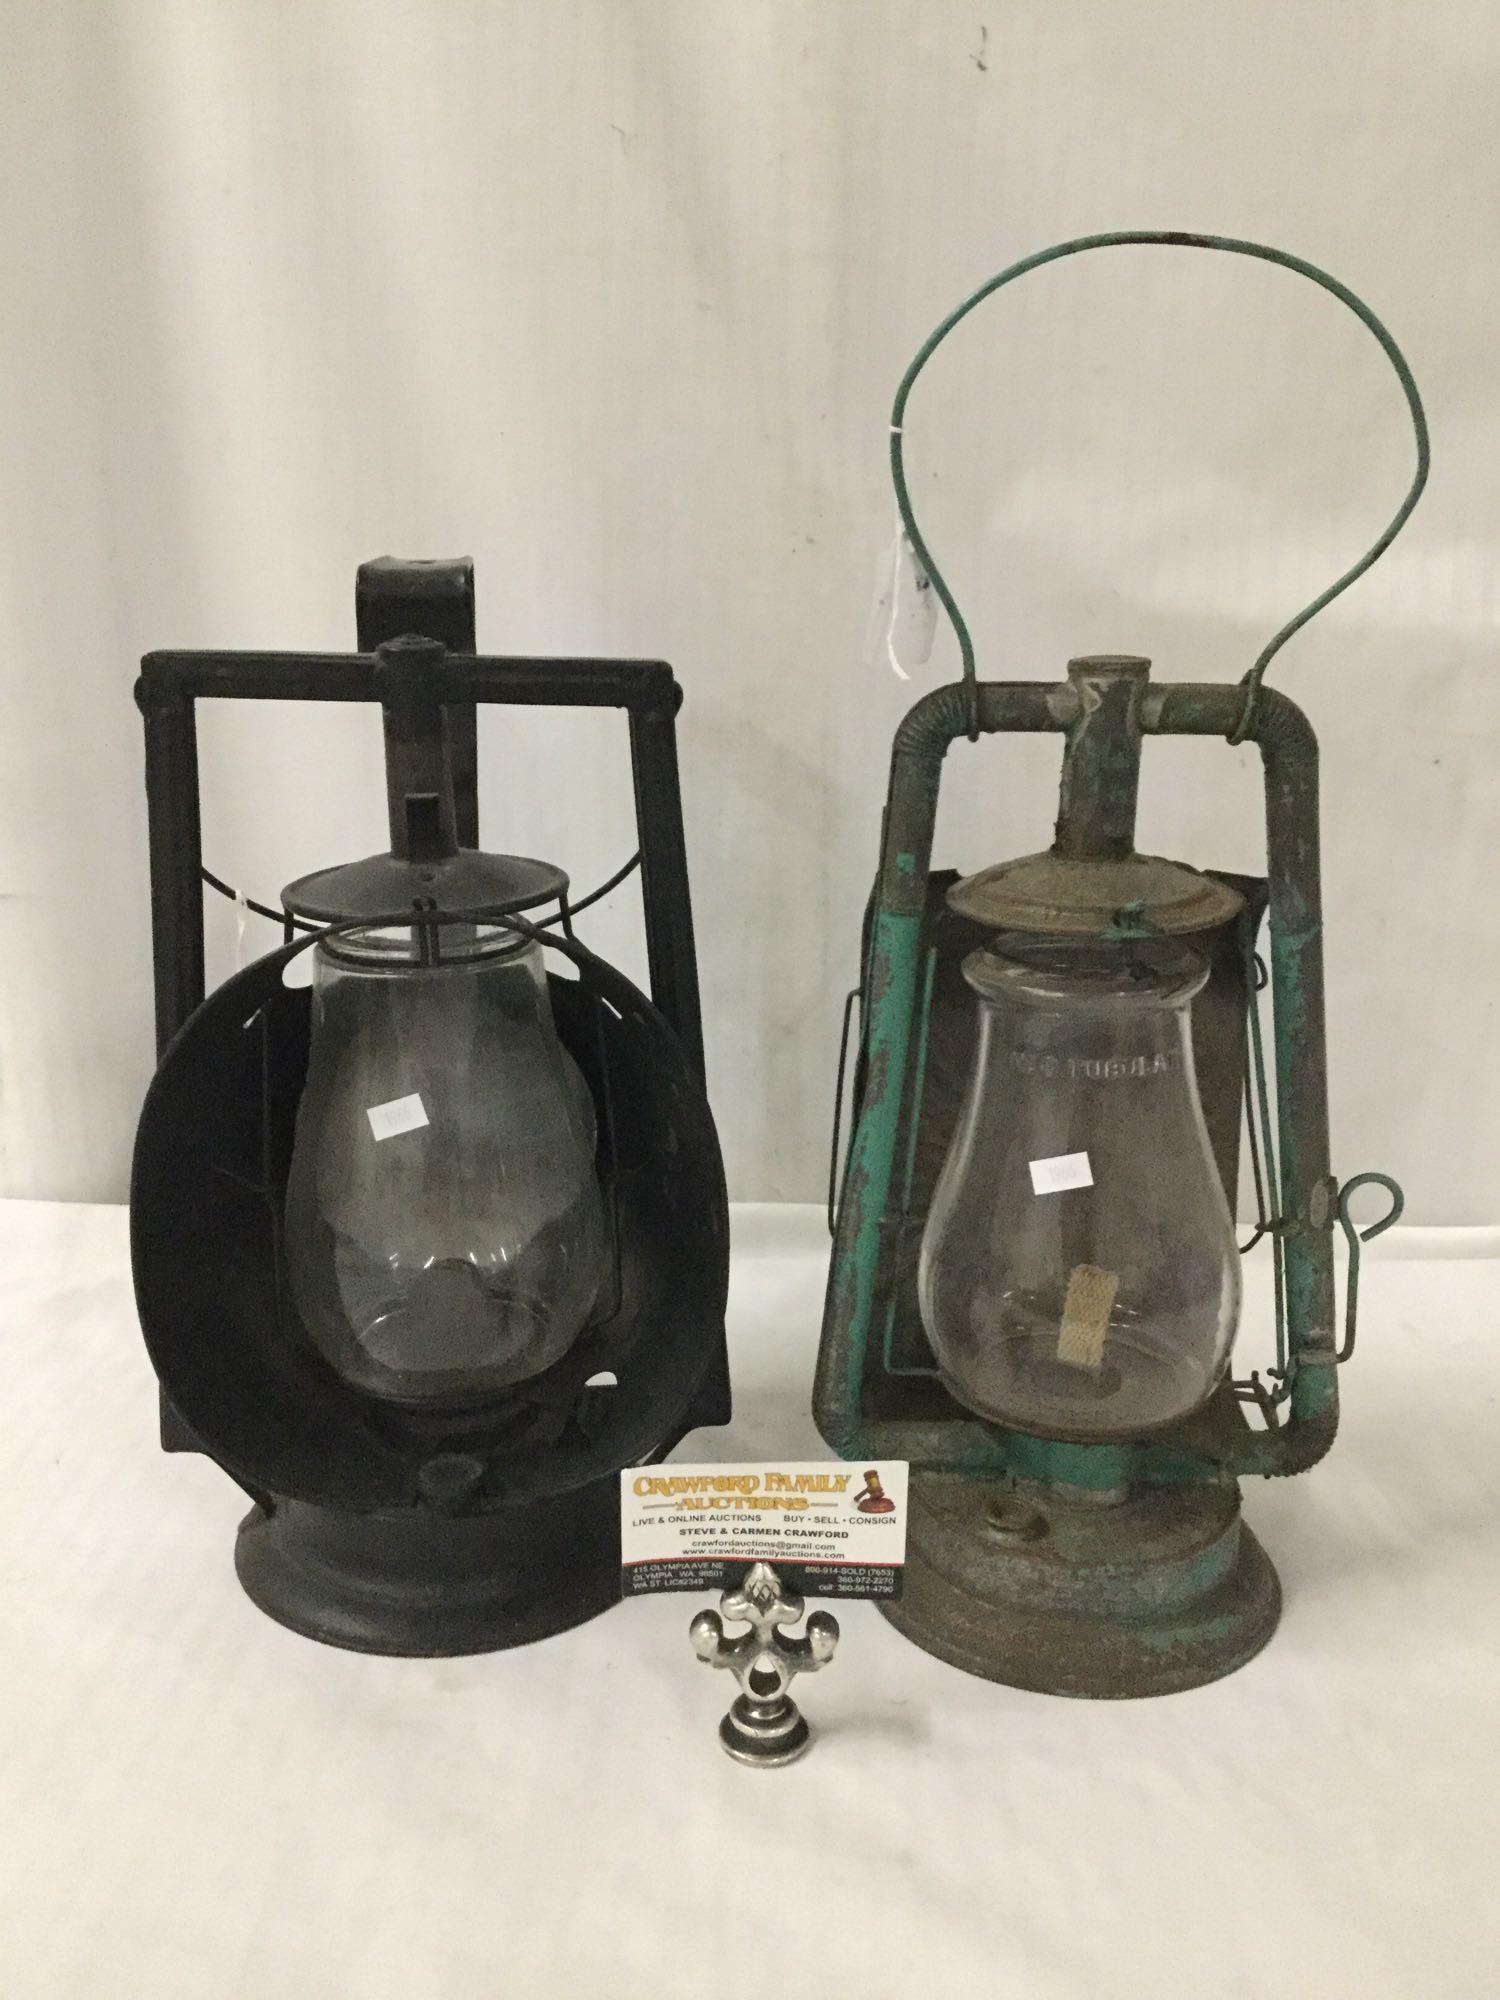 Lot of 2; No. 0 Tubular vintage kerosene lantern and Dietz Acme Inspector kerosene lamp lantern,